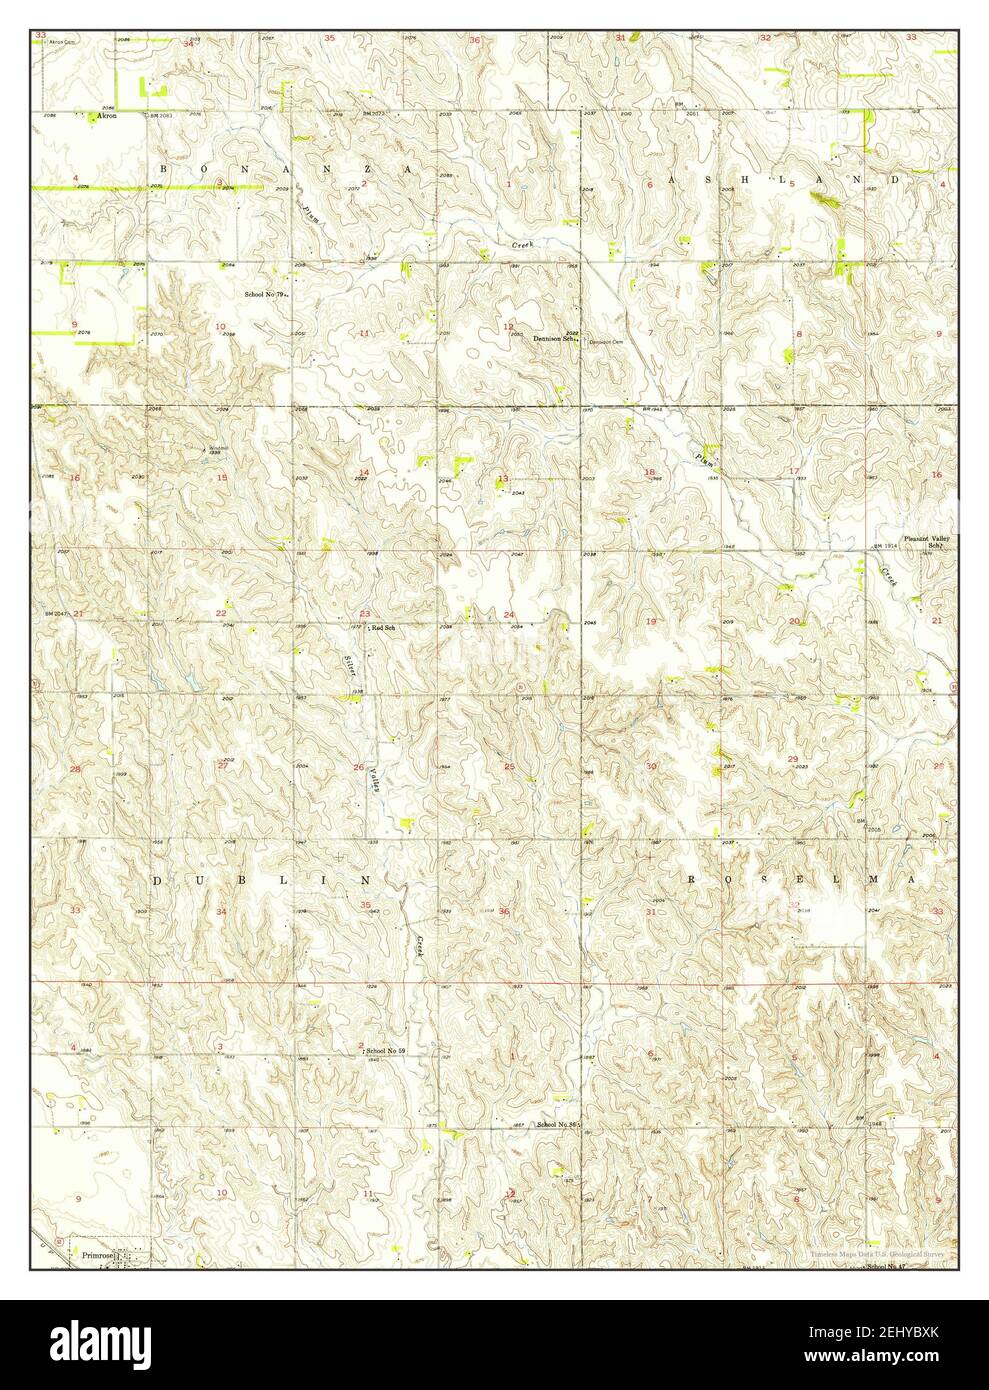 Akron, Nebraska, map 1954, 1:24000, United States of America by Timeless Maps, data U.S. Geological Survey Stock Photo